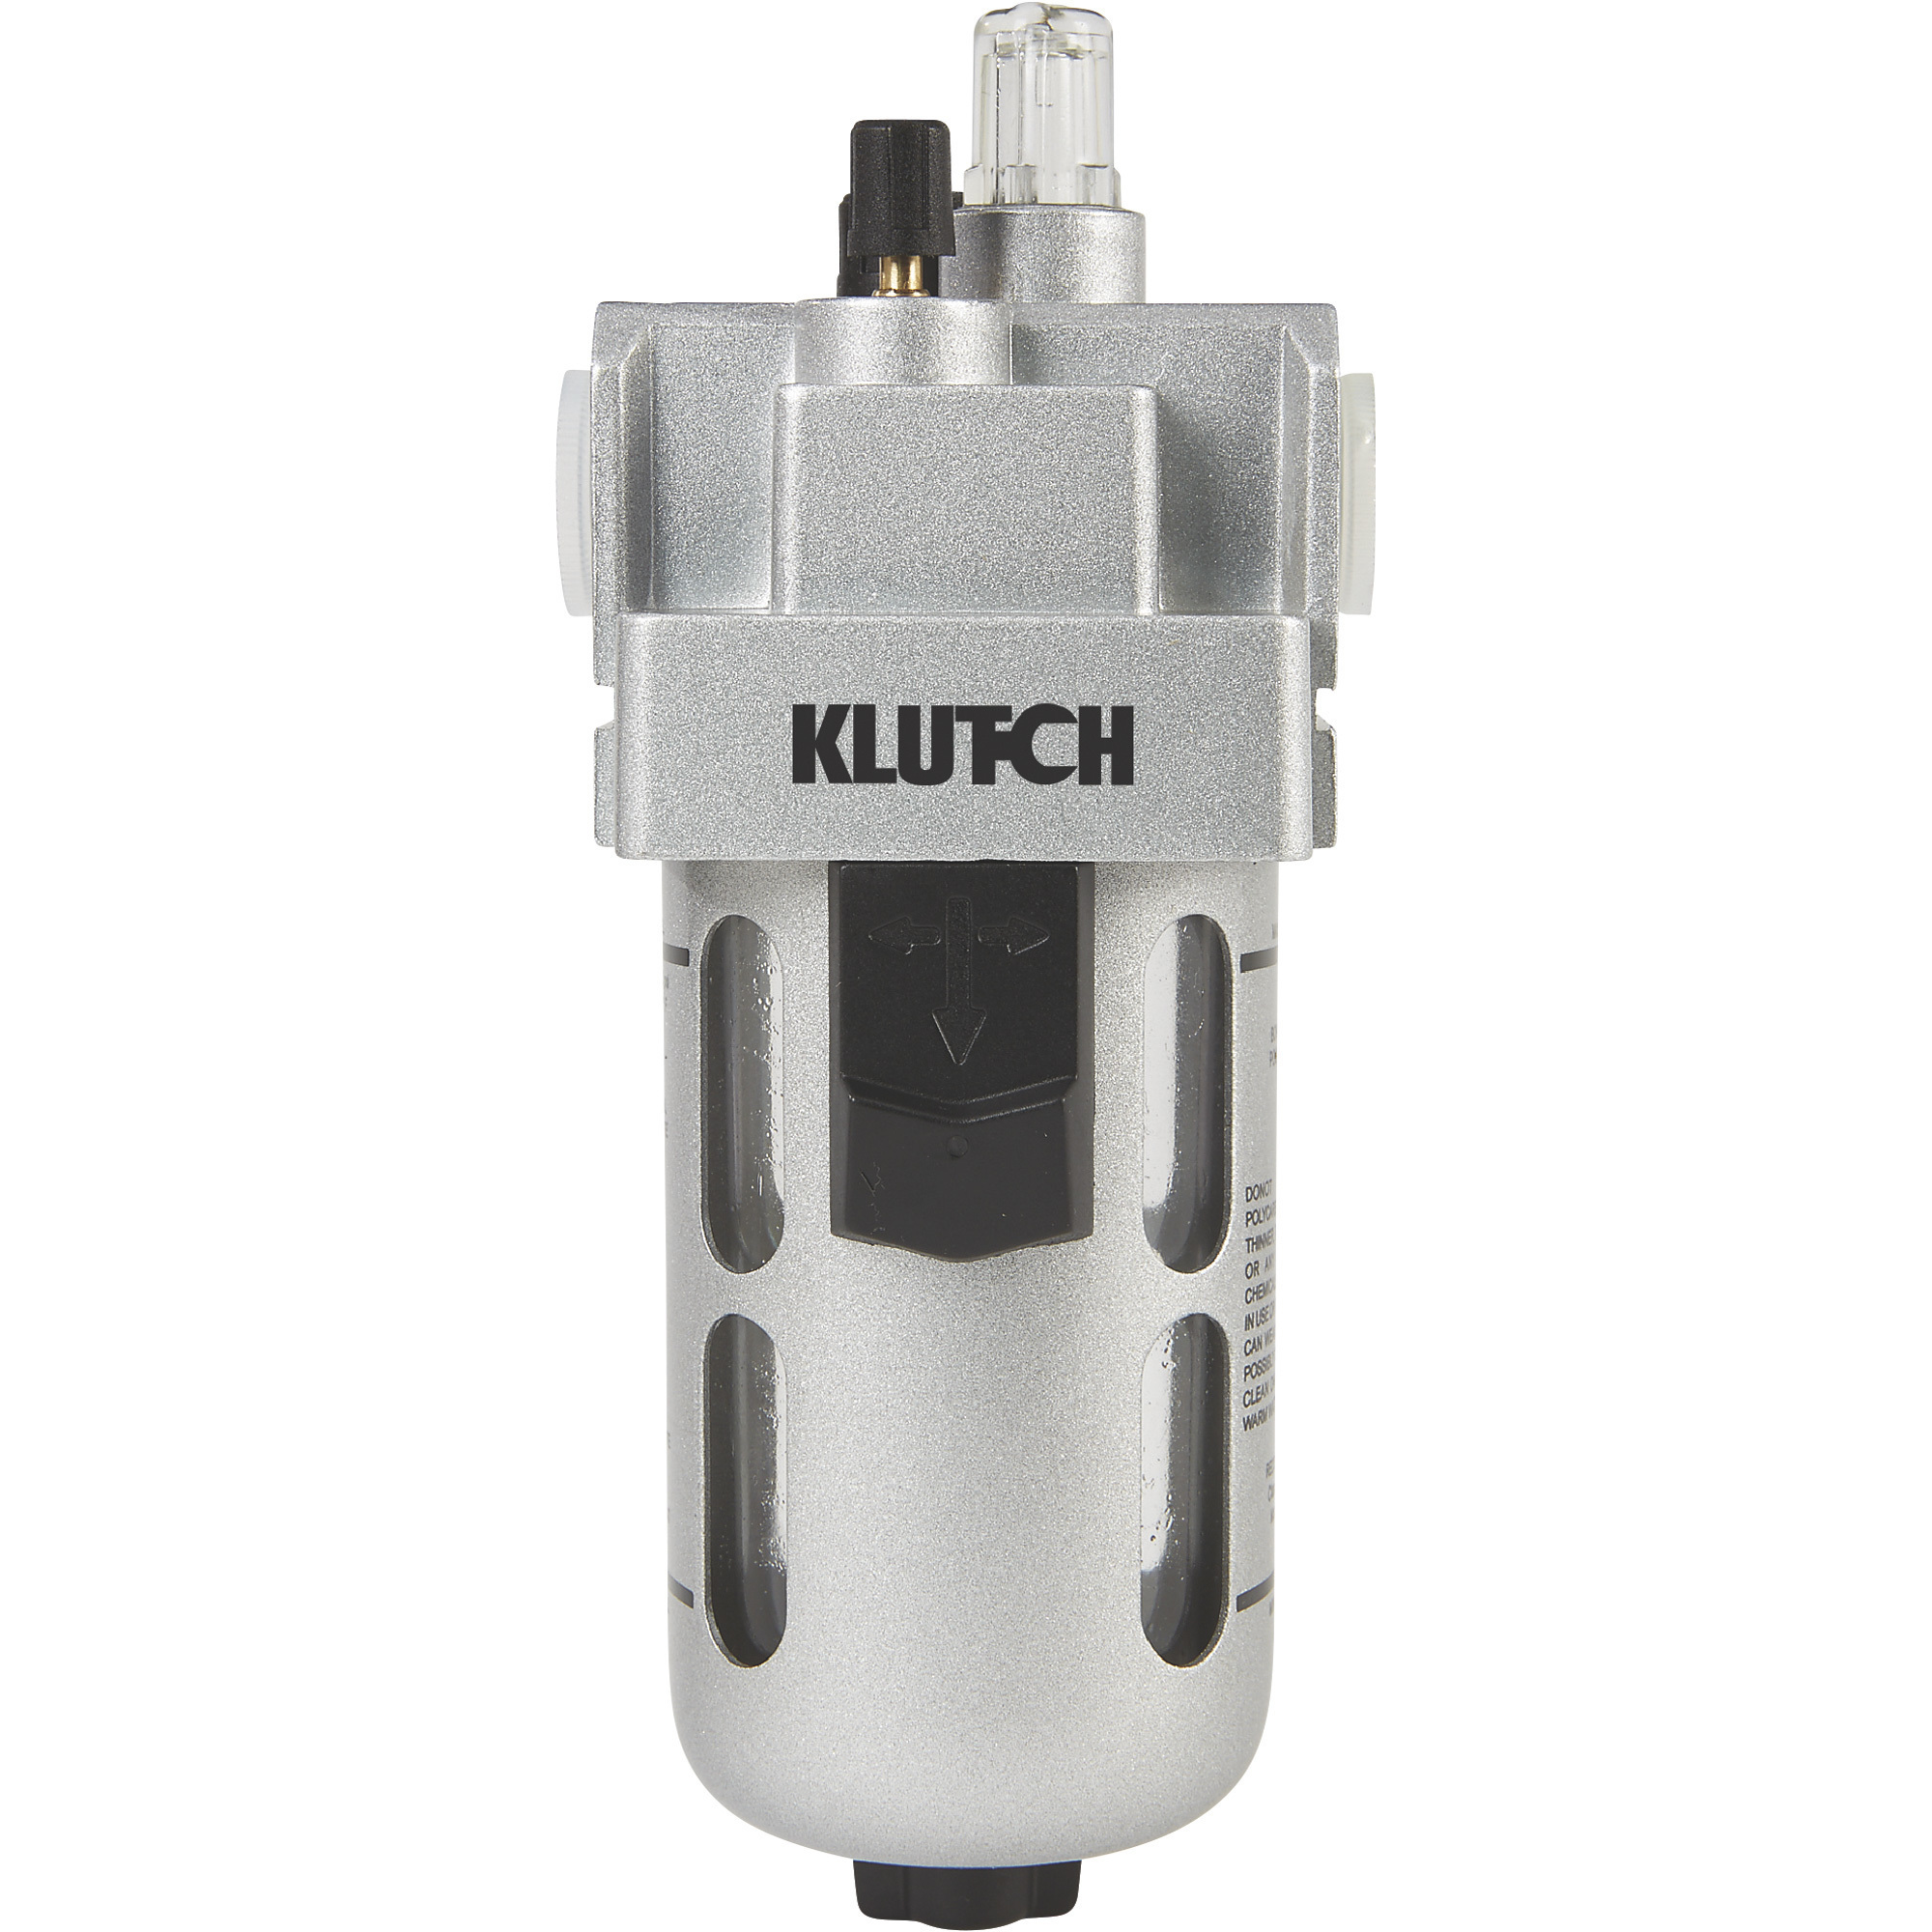 Klutch Air Compressor Lubricator, 1/2Inch NPT, 200 CFM, 145 PSI